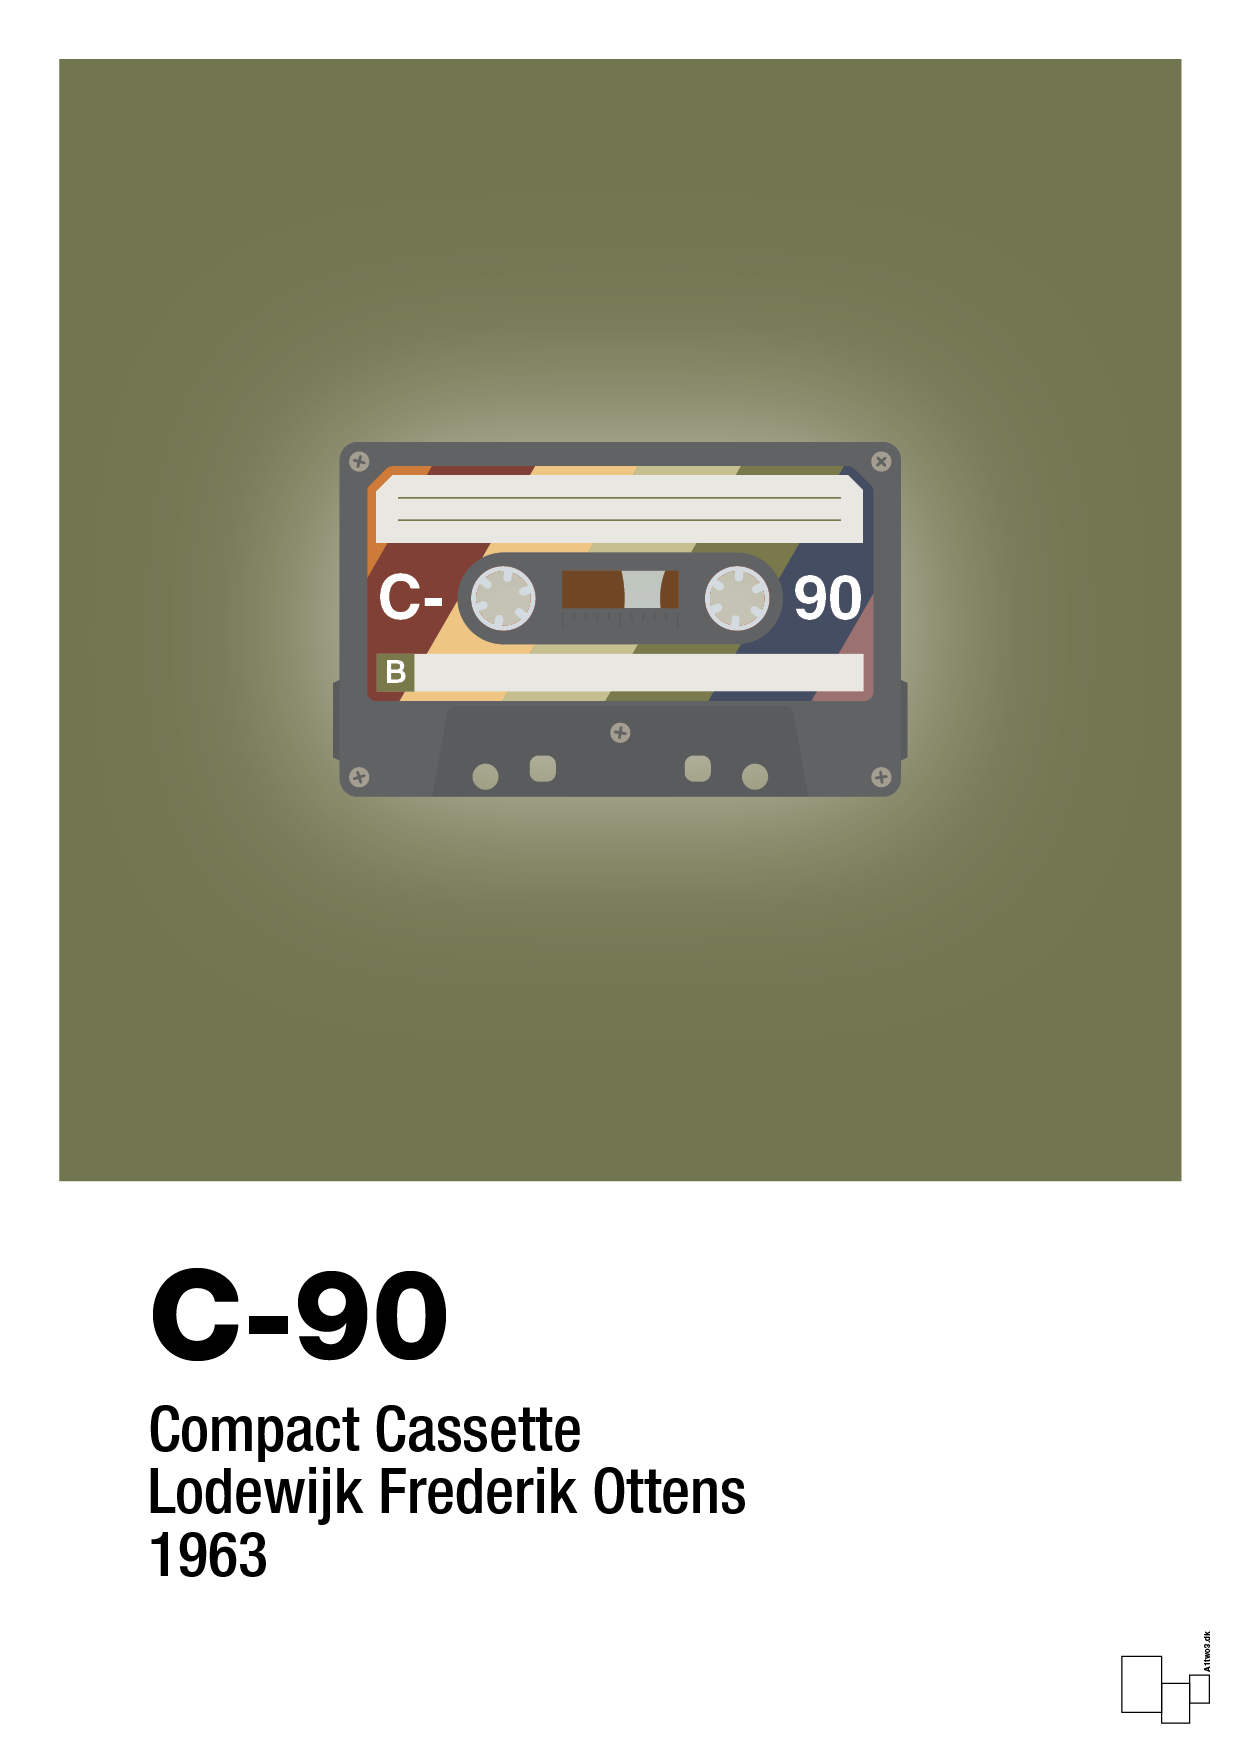 kassettebånd c-90 - Plakat med Grafik i Secret Meadow